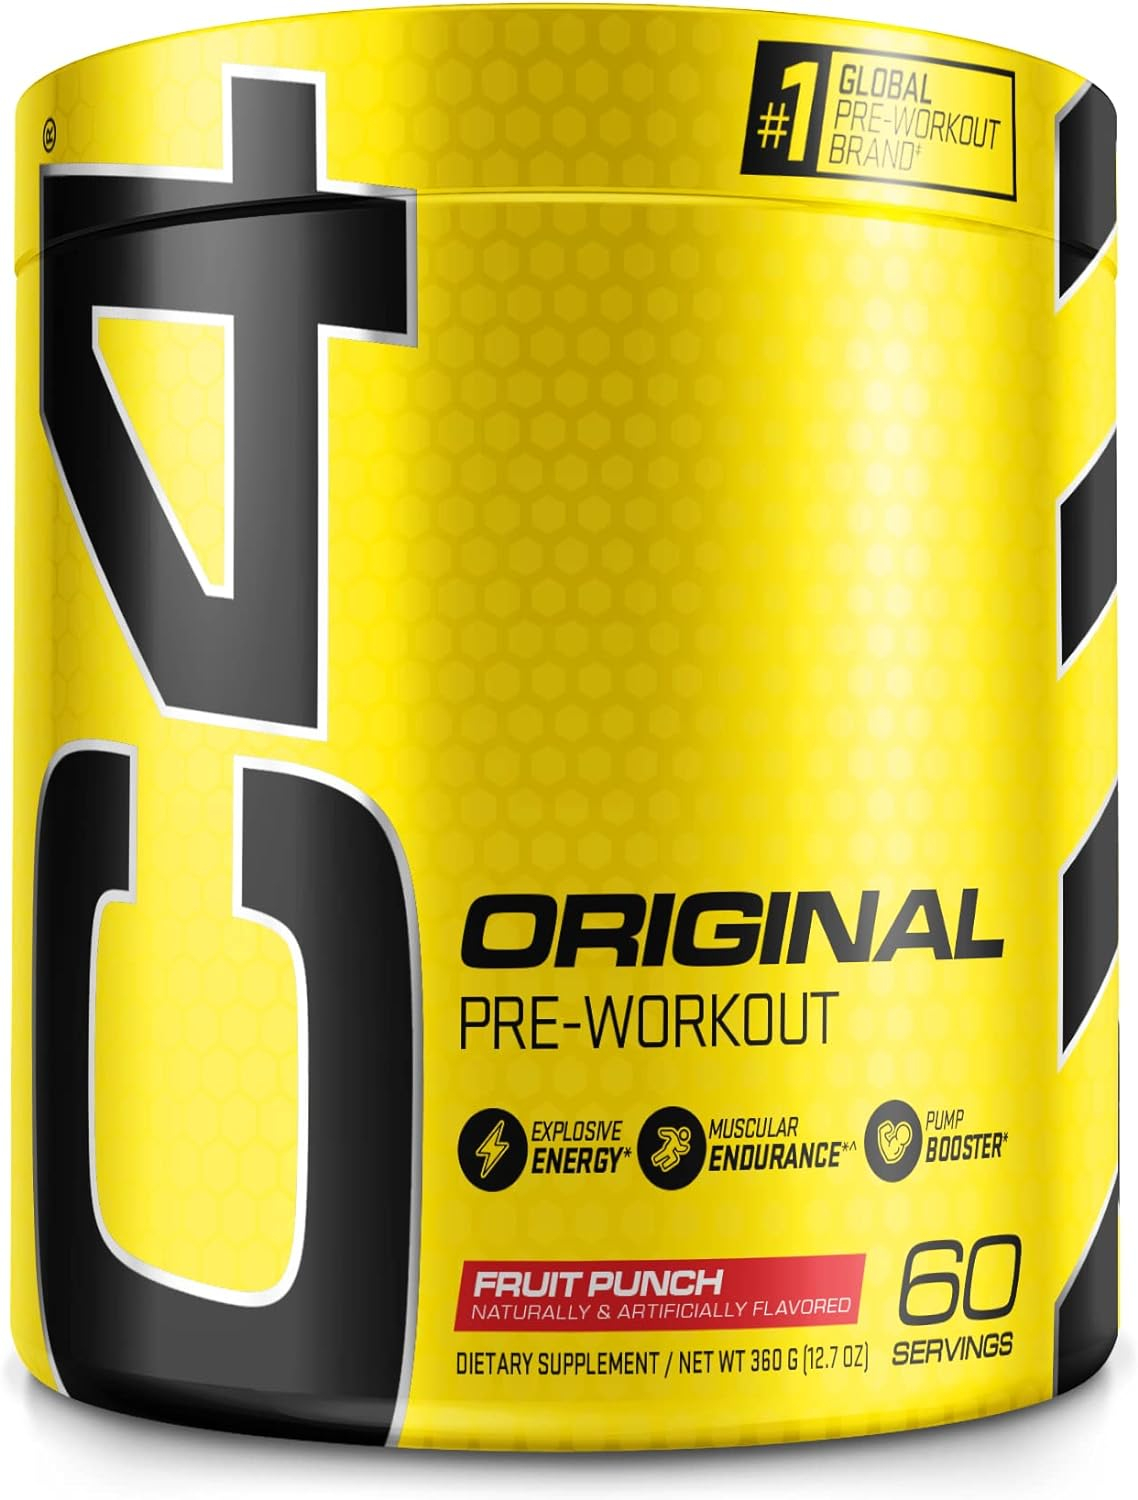 C4 Original Pre Workout Powder Fruit Punch - Vitamin C for Immune Support - Sugar Free Preworkout Energy for Men  Women - 150mg Caffeine + Beta Alanine + Creatine - 60 Servings